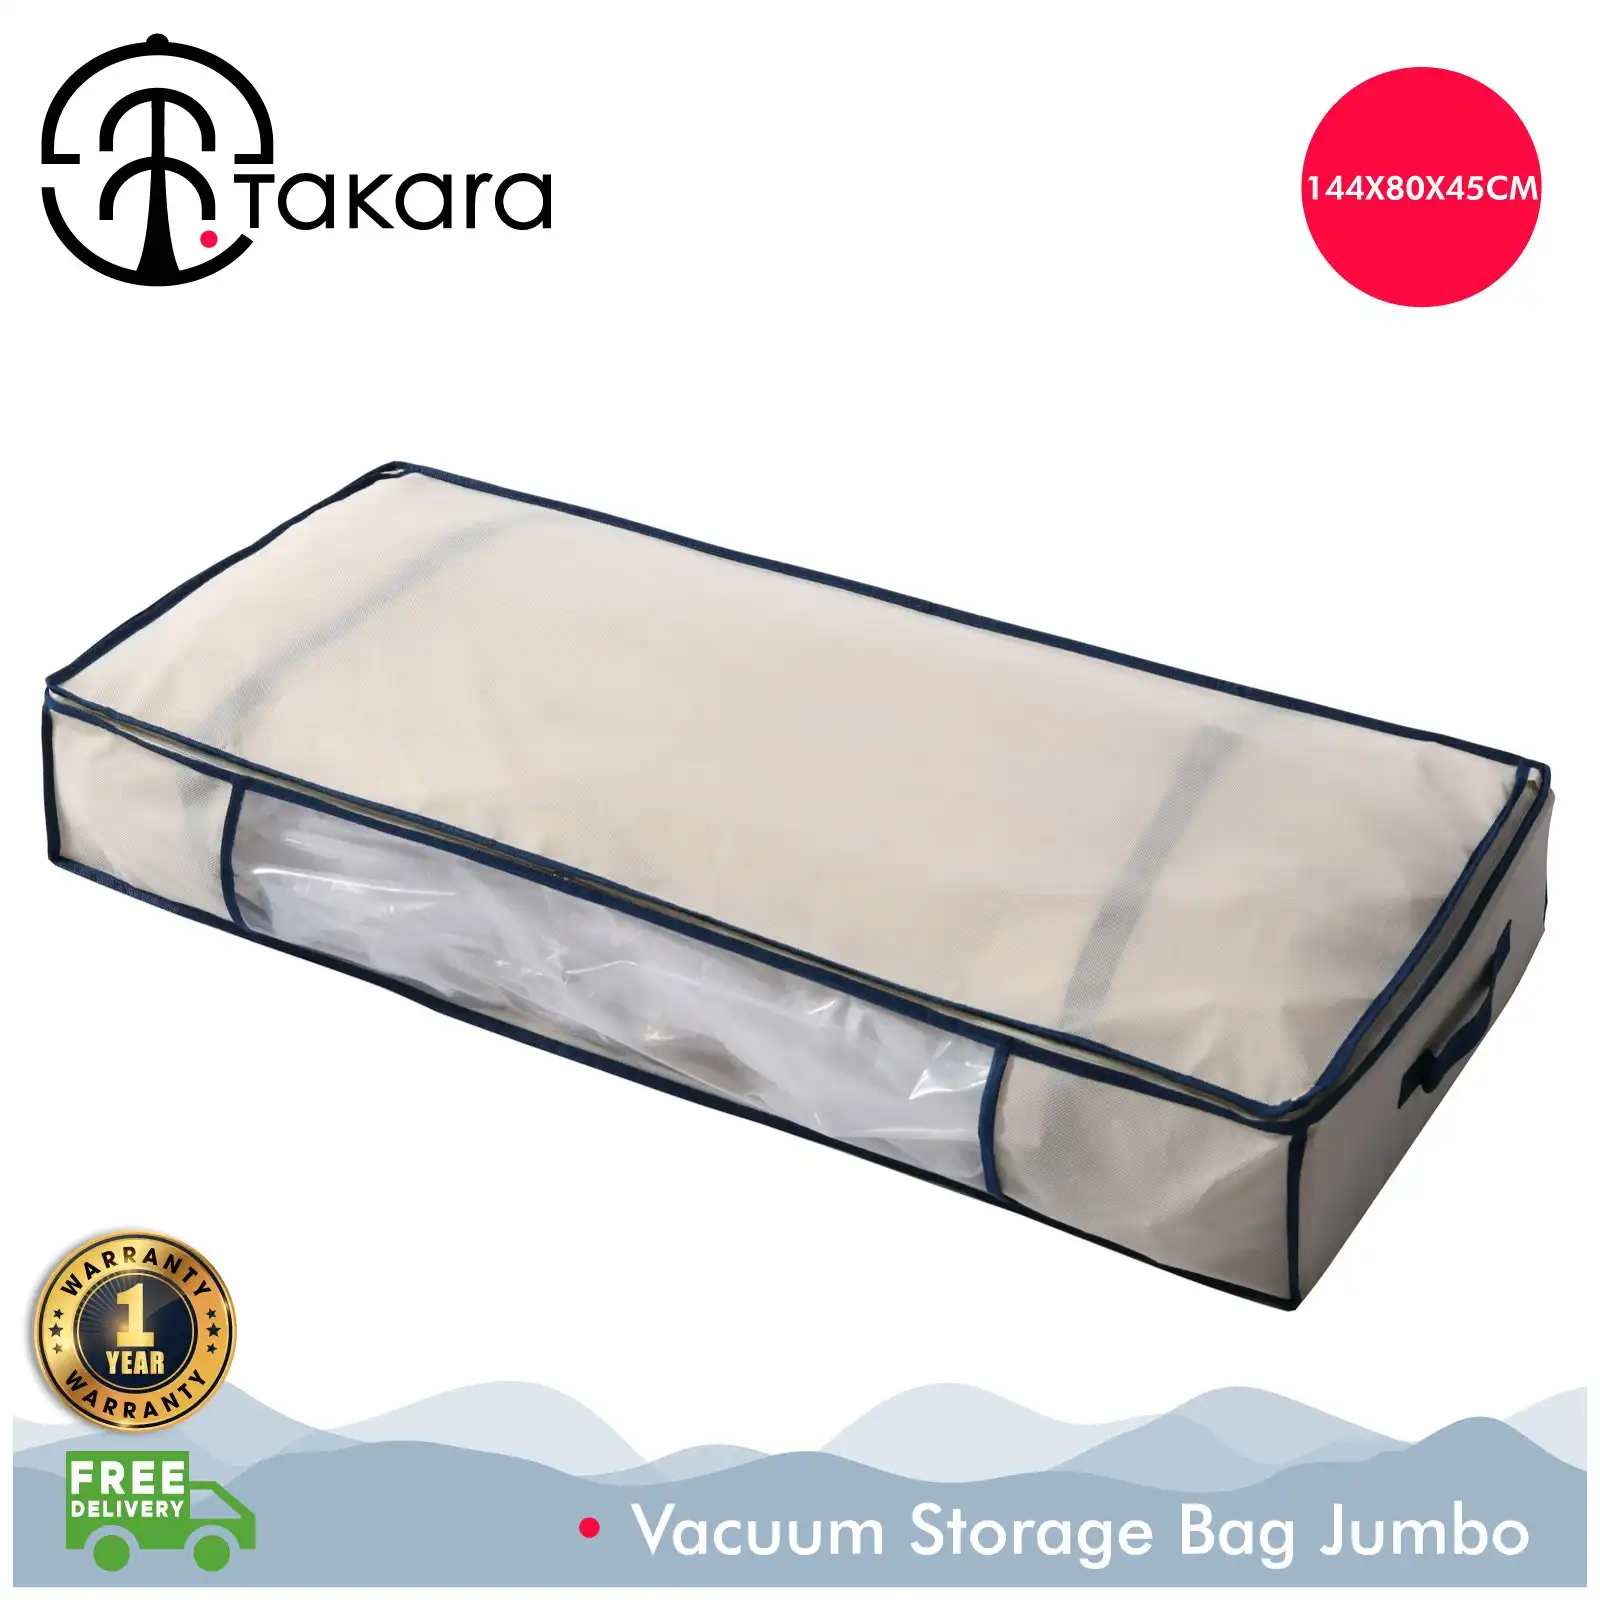 Takara Vacuum Storage Bag Jumbo Opaque & Beige 144x80x45cm